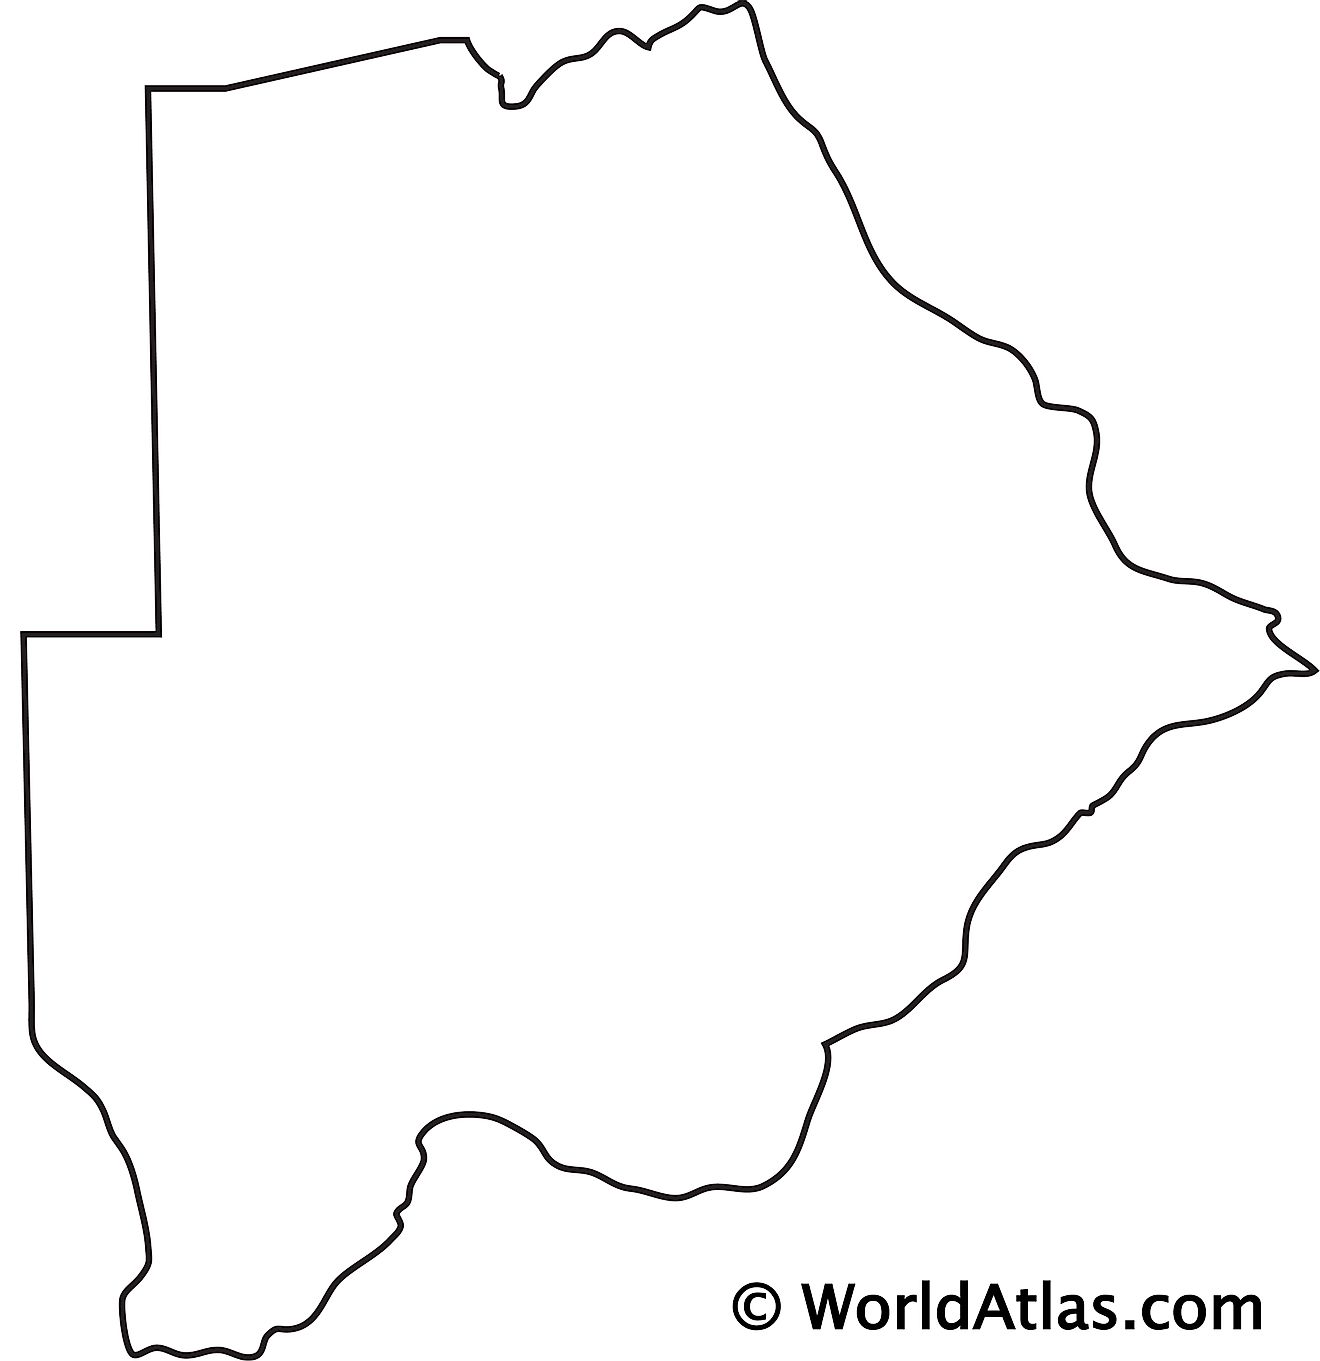 Blank outline map of Botswana